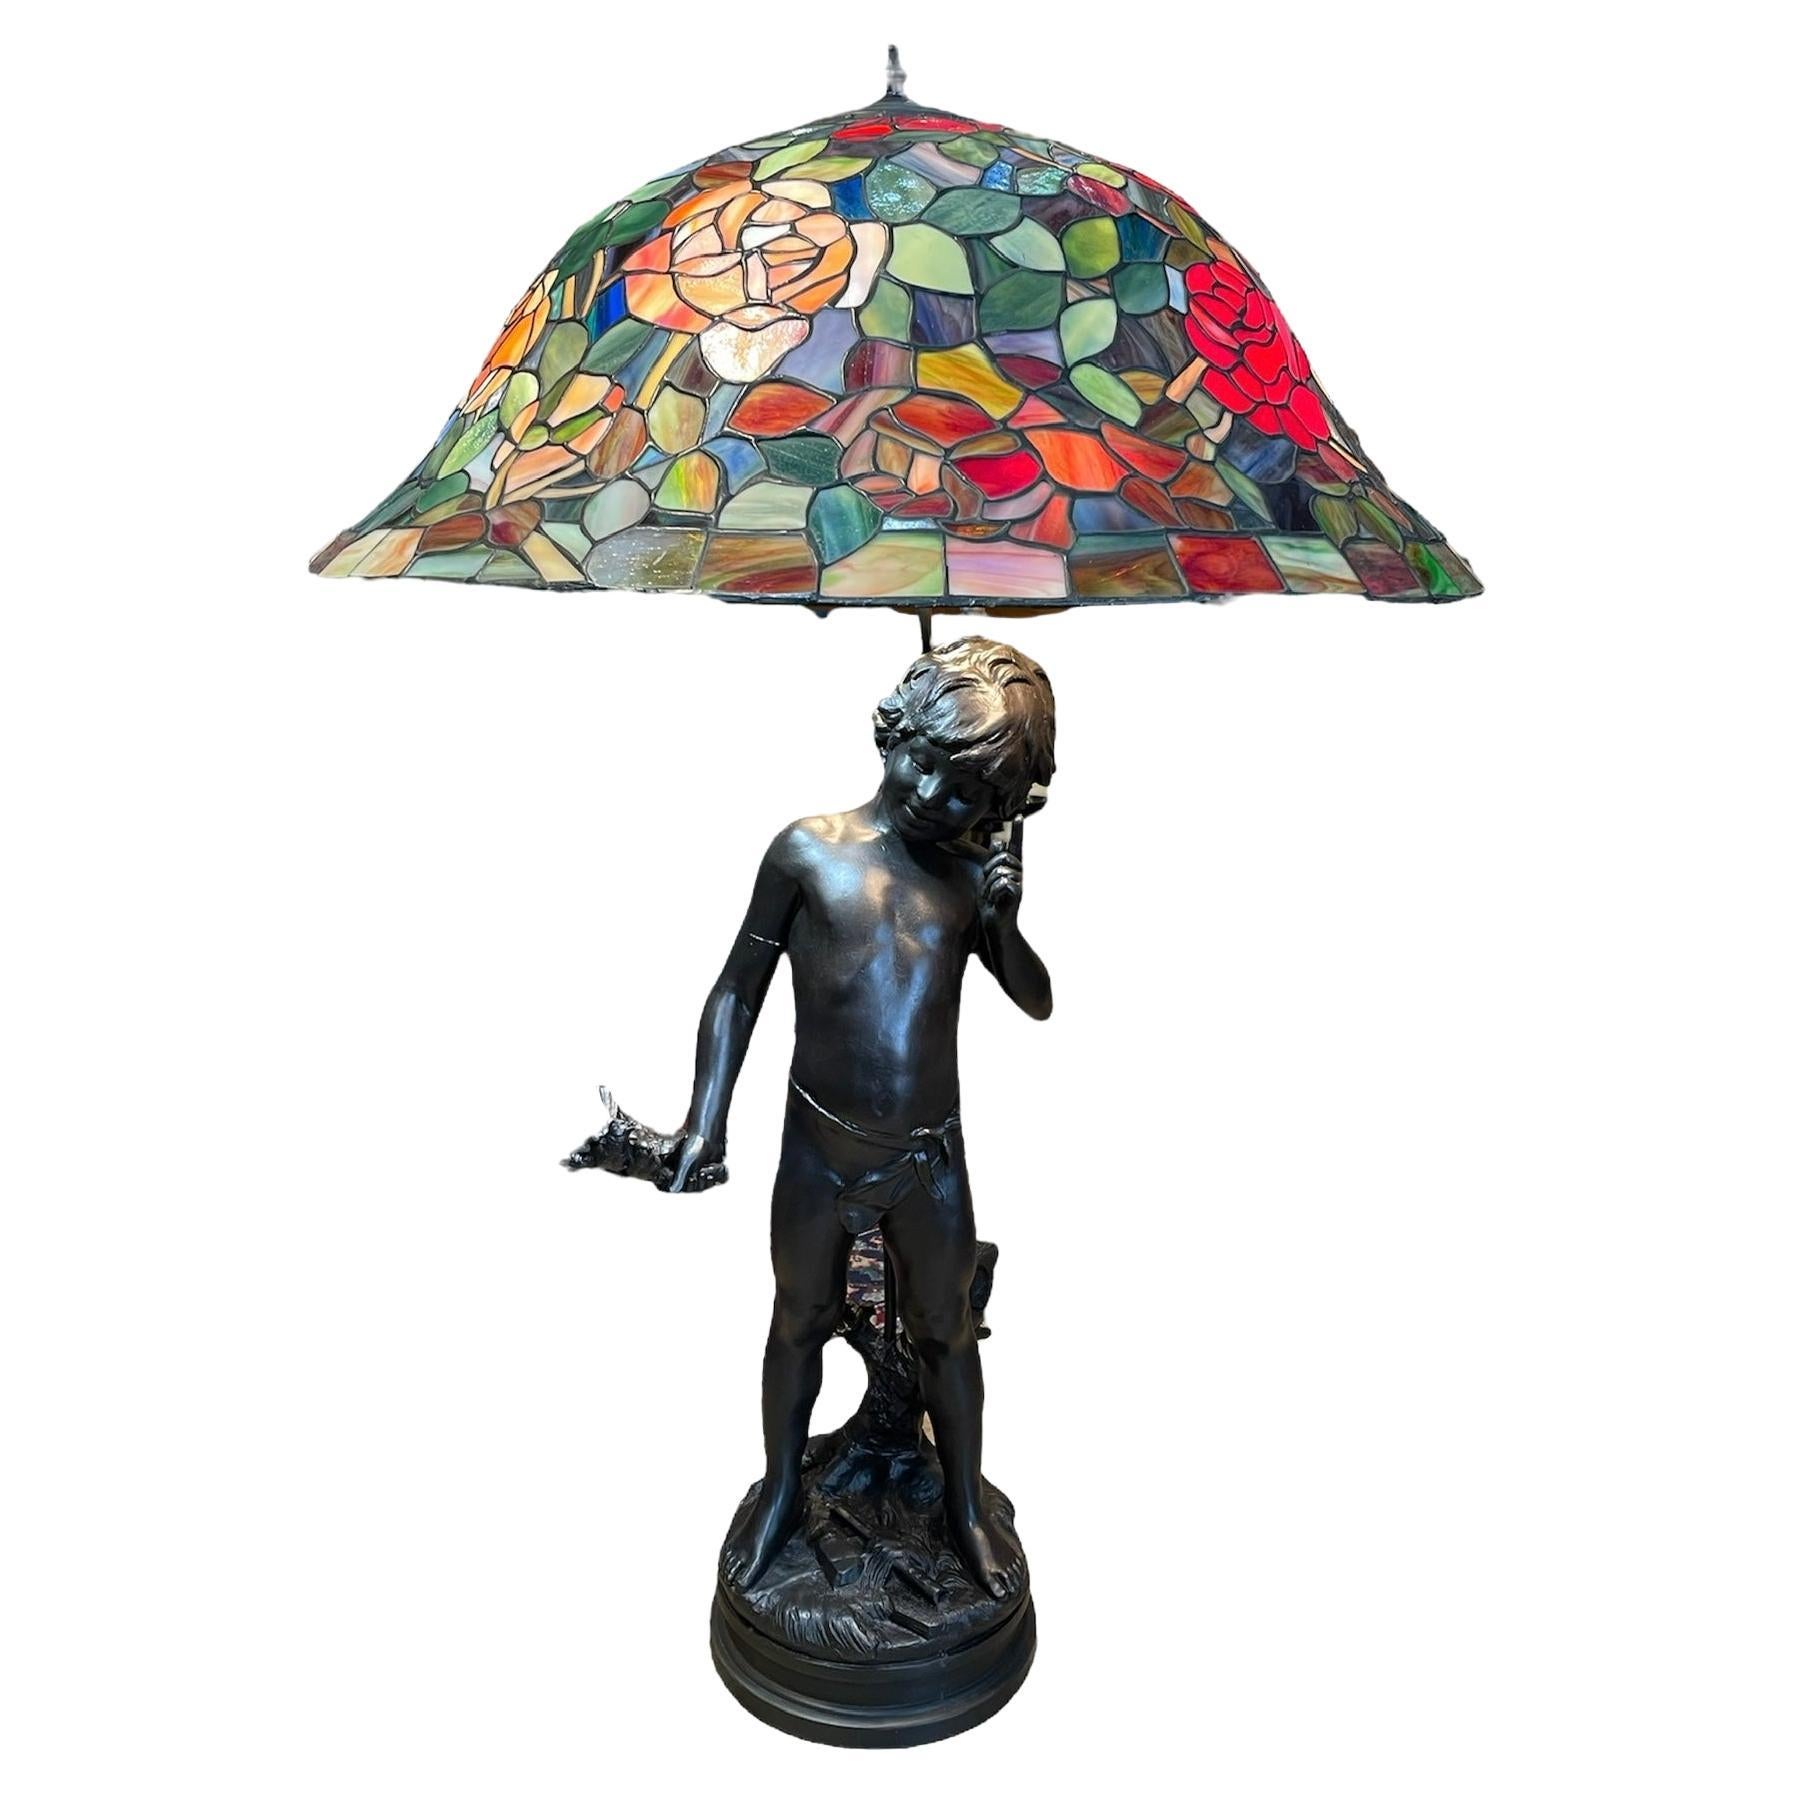 Auguste Moreau “Charmeur” Patinated Metal Sculpture Lamp